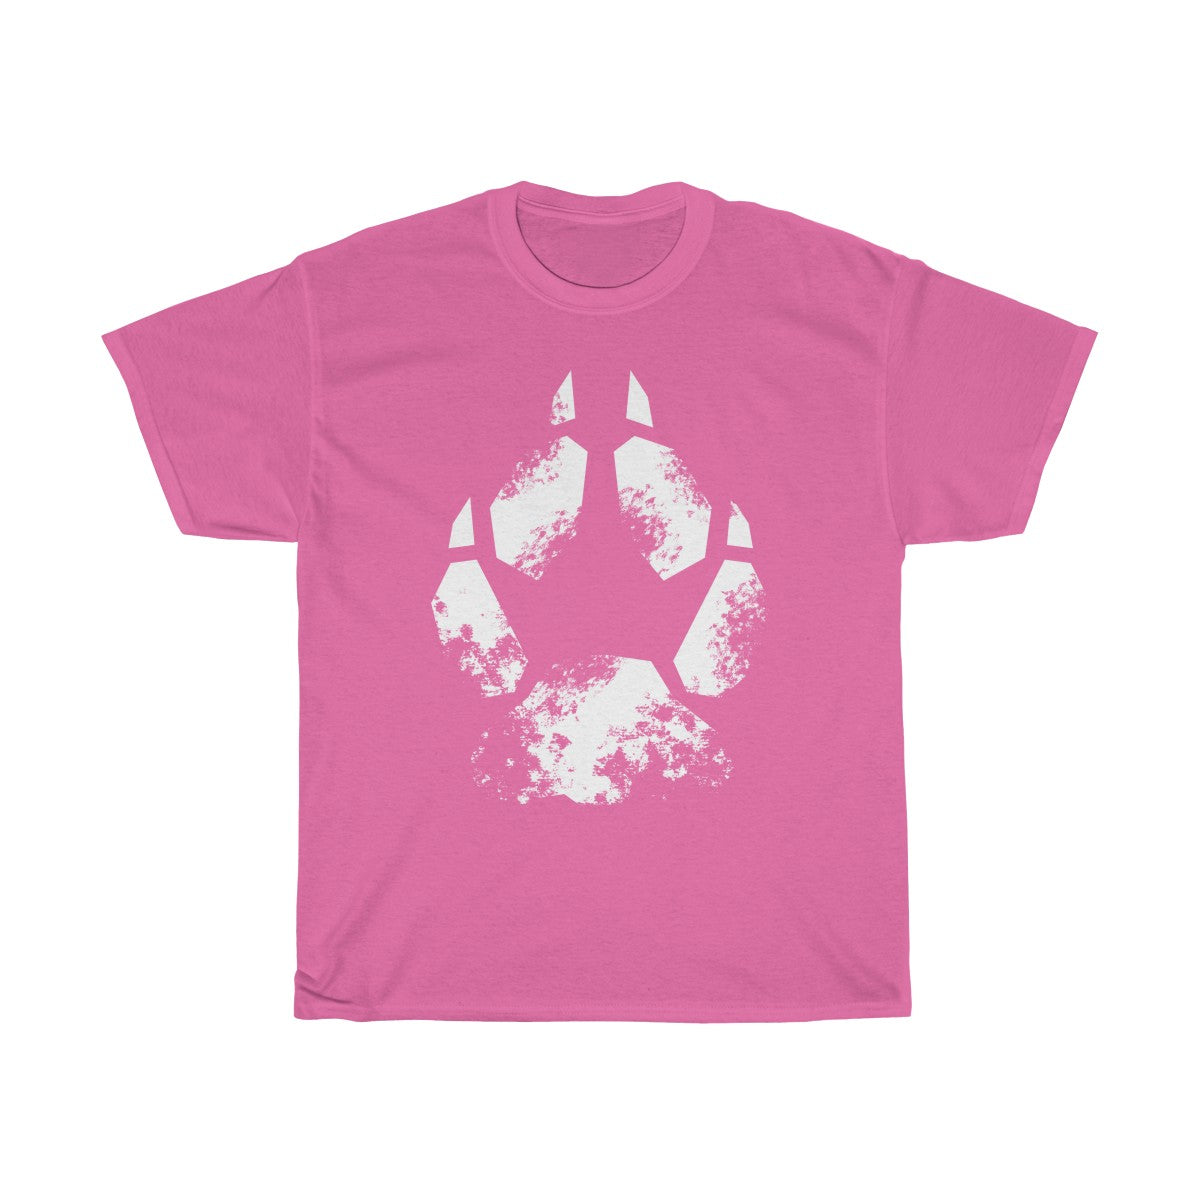 Splash White Fox - T-Shirt T-Shirt Wexon Pink S 